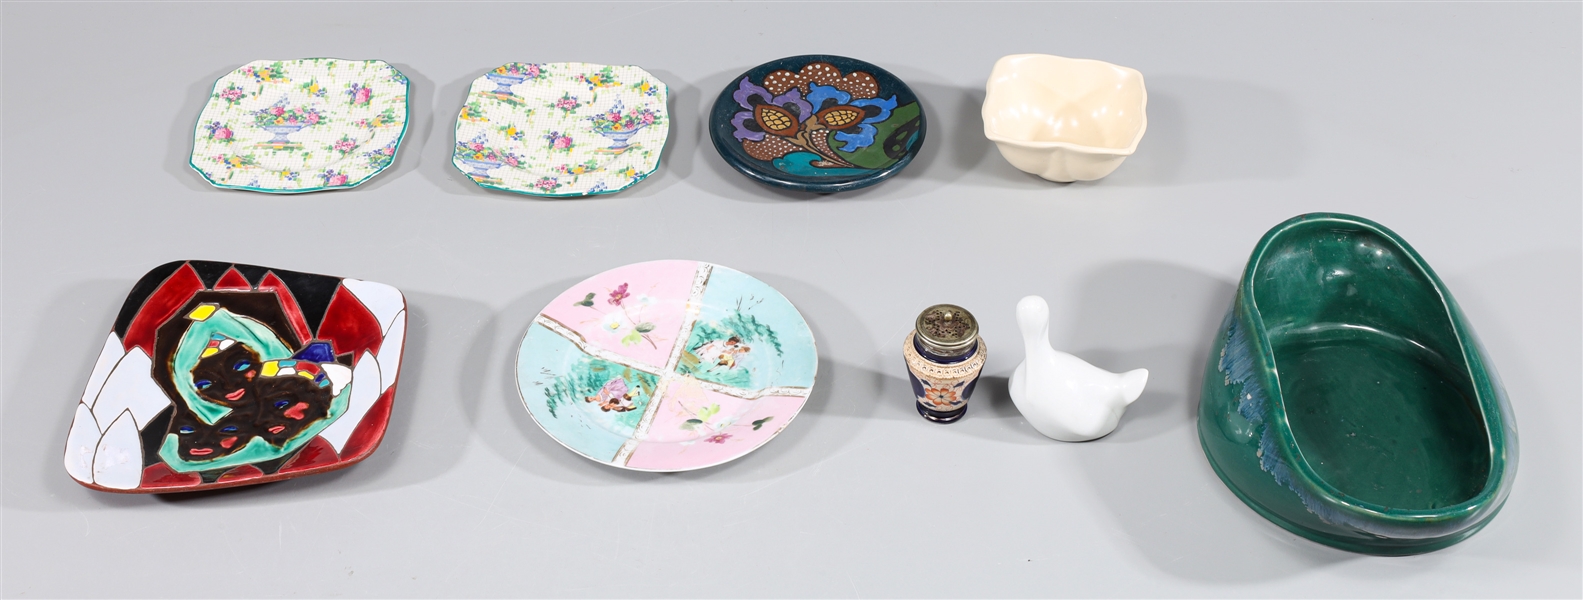 Group of Nine Vintage Ceramic Collection, Royal Winton, Royal Dux, Decoro